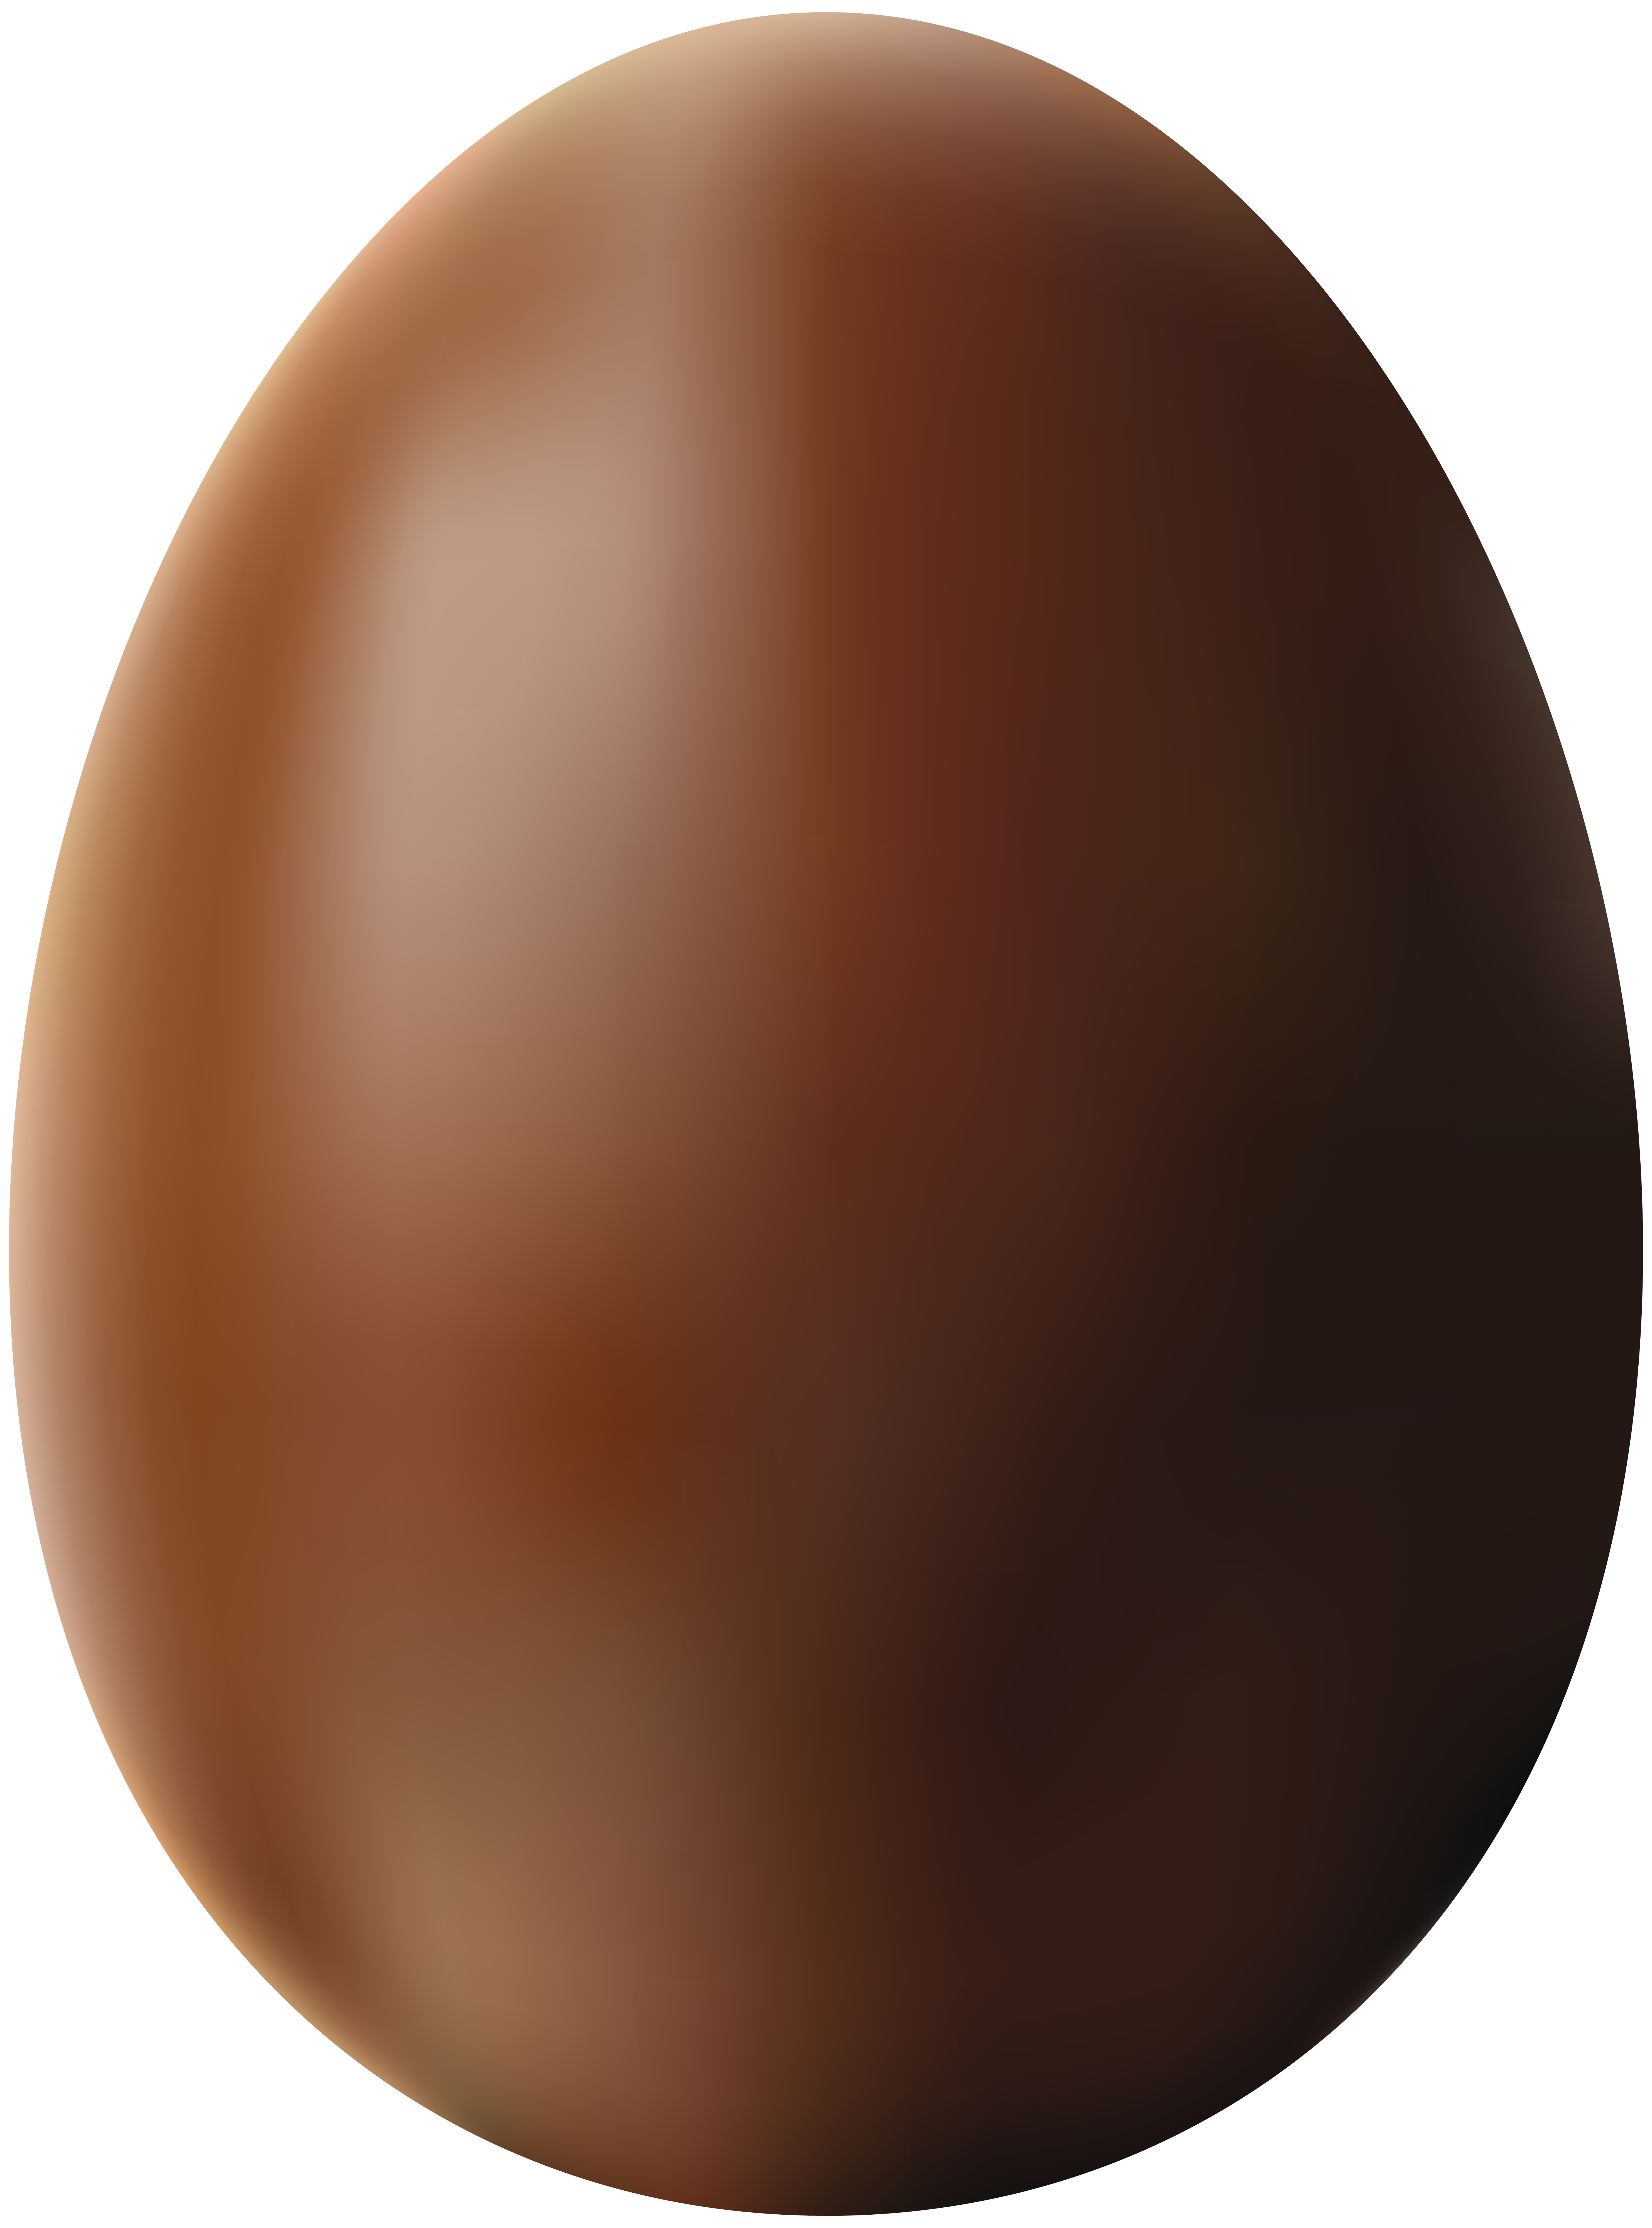 Броун ЭГГ. Шоколадное яйцо. Коричневое яйцо. Шоколадные яички. Яйца без шоколада